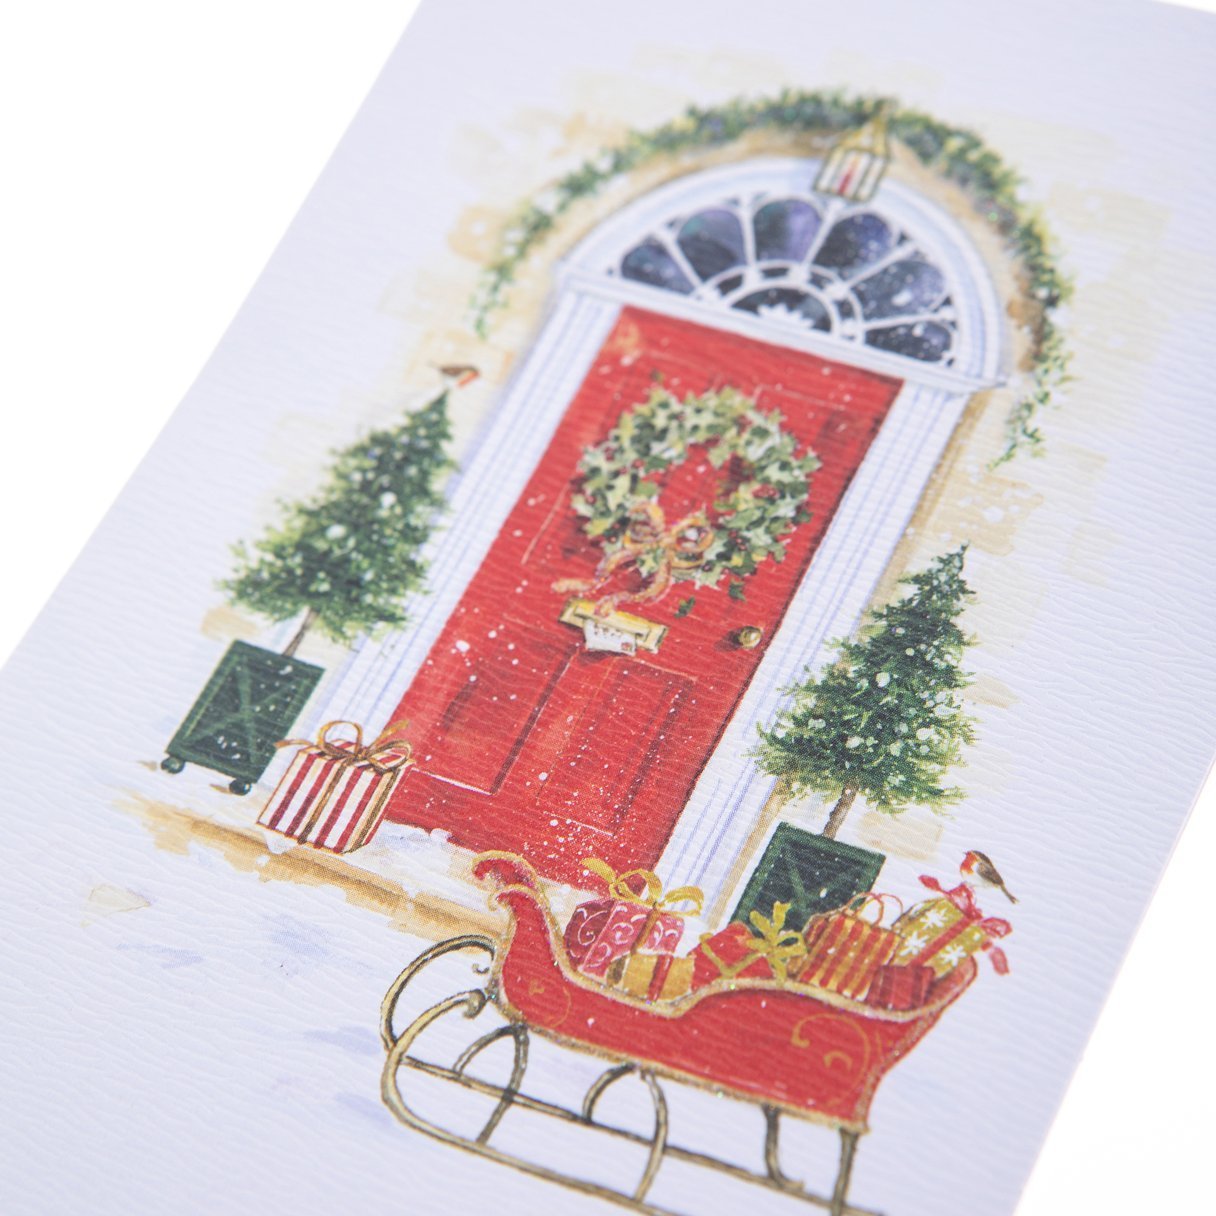 Holiday Door Petite Boxed Cards - Royalties